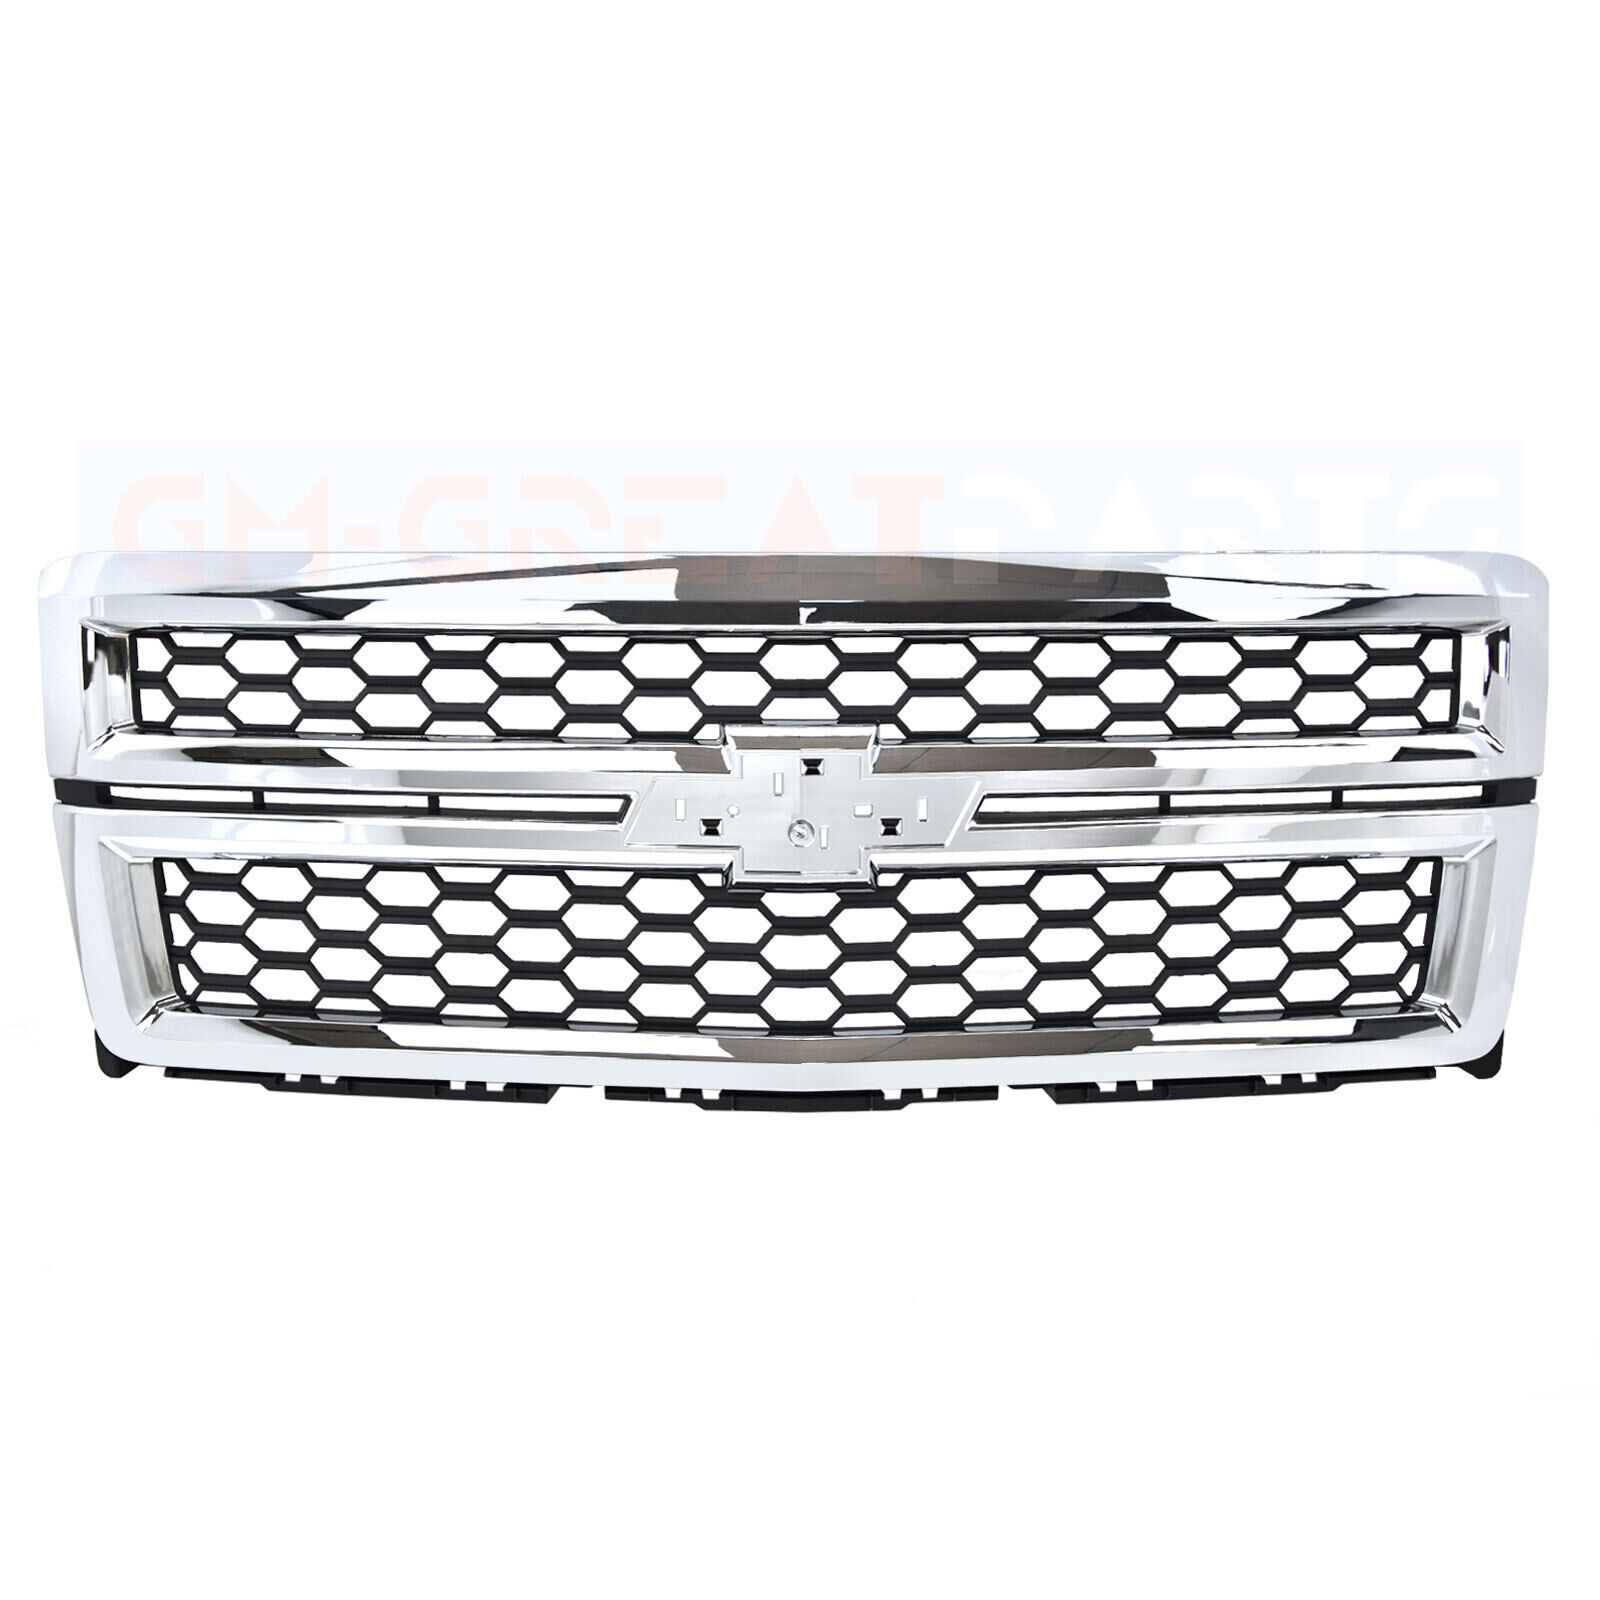 2014-2015 Chevy Chevrolet Silverado 1500 front upper bumper grille Chrome Black